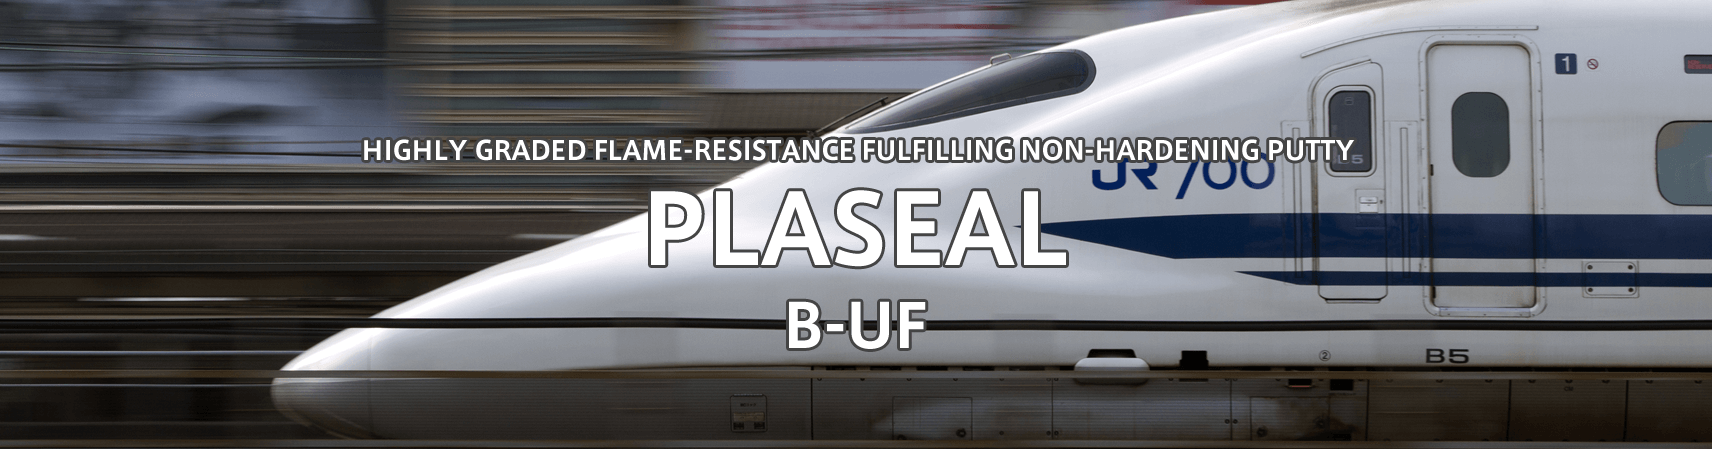 PLASEAL B-UF for Train car